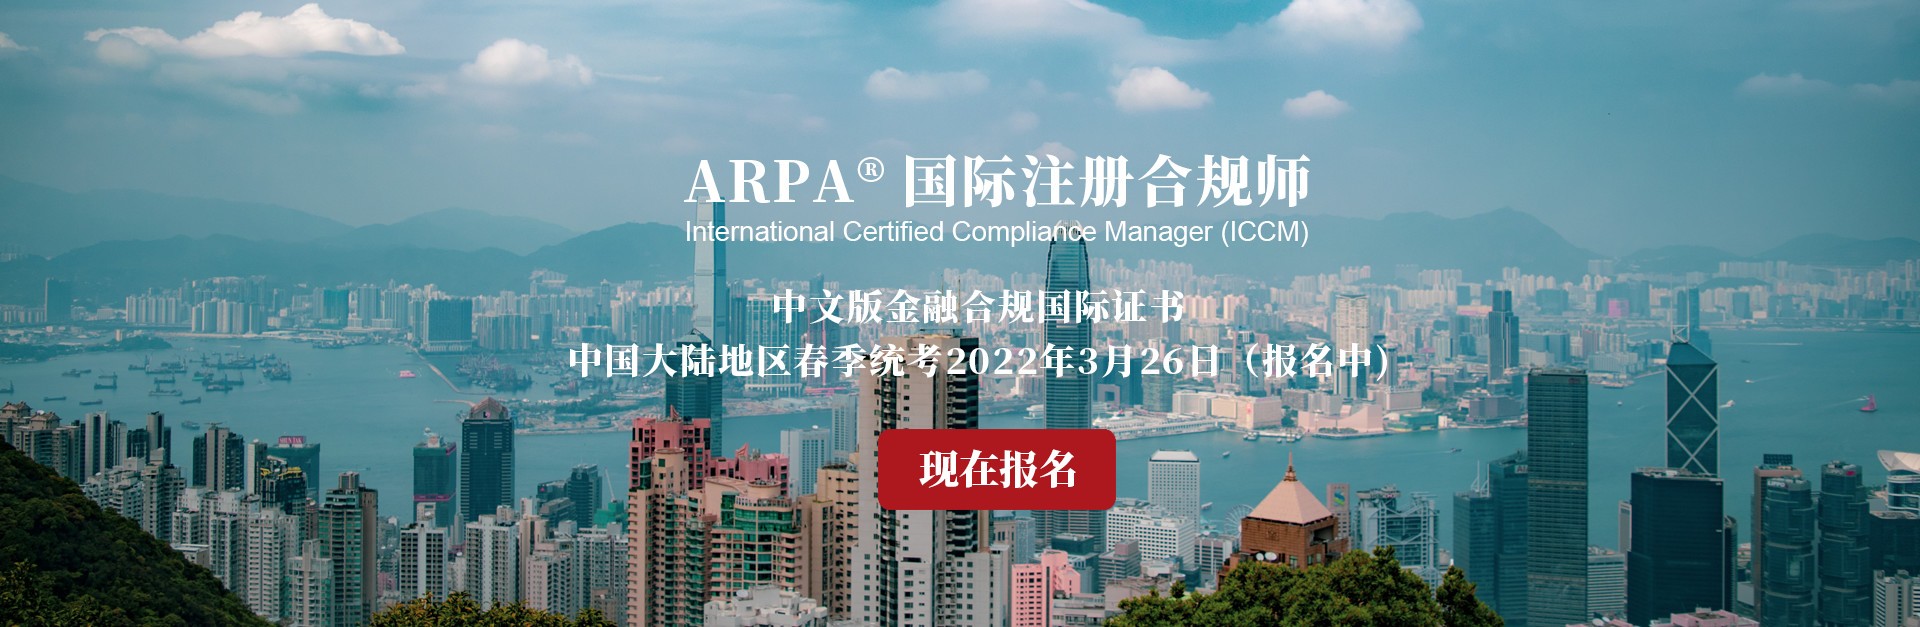 ARPA国际注册合规师